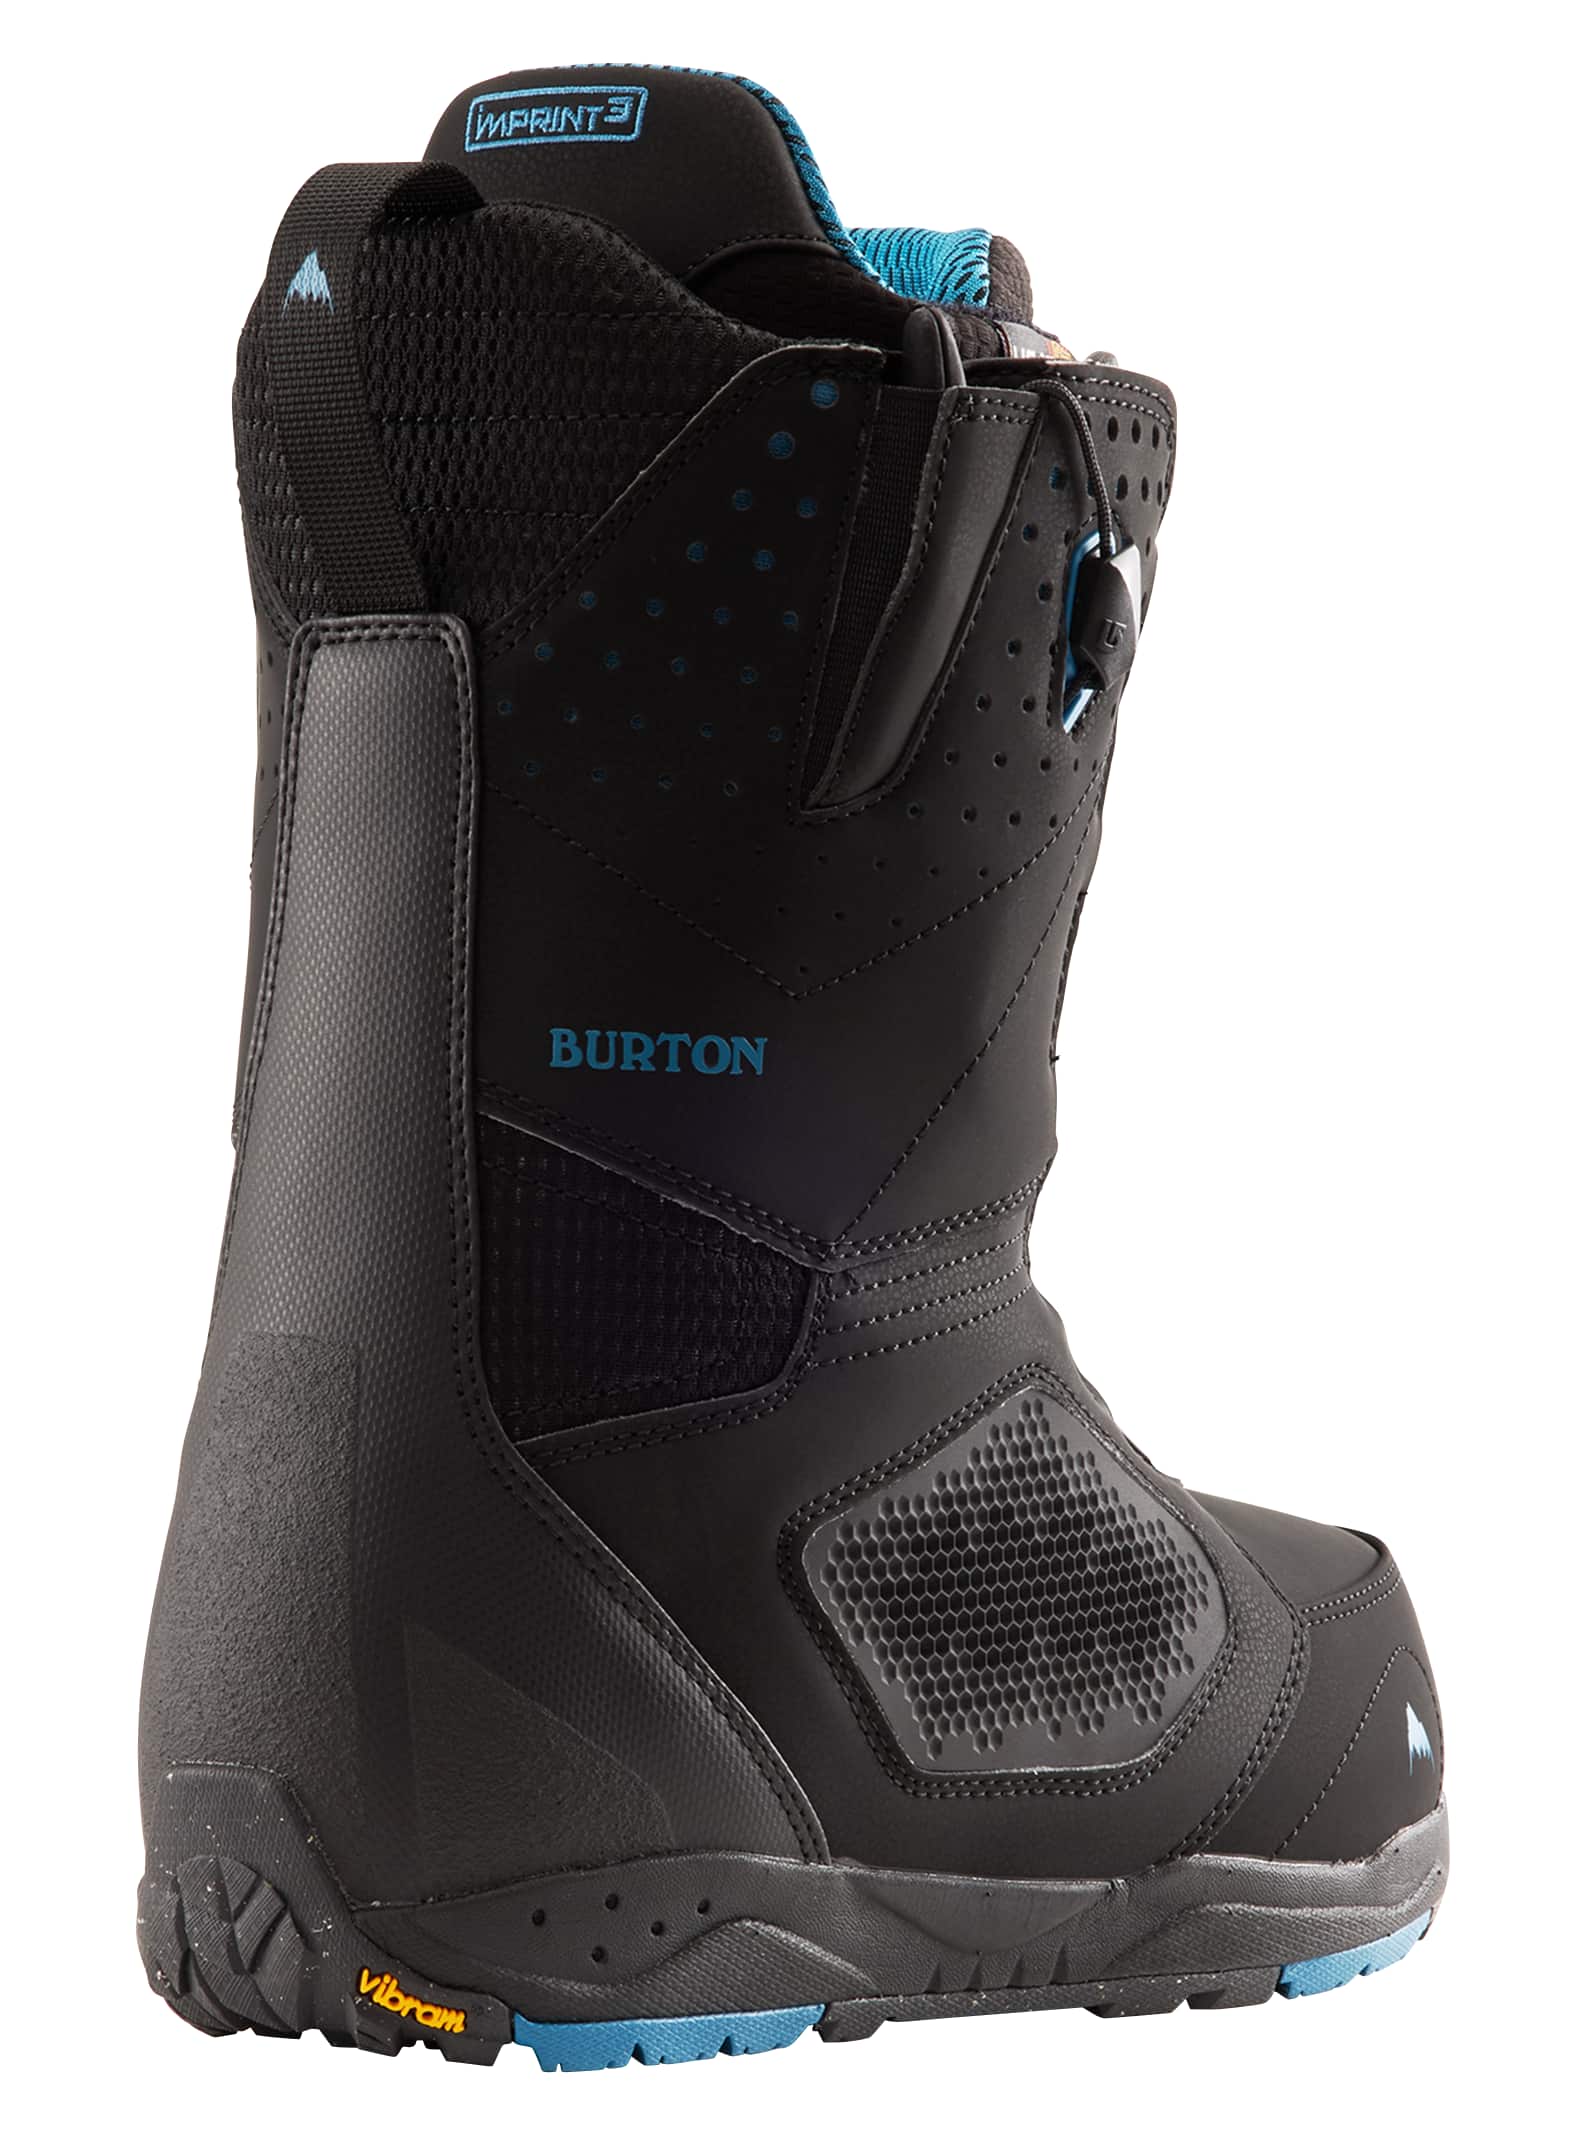 Men's Photon Snowboard Boots | Burton.com Winter 2023 US